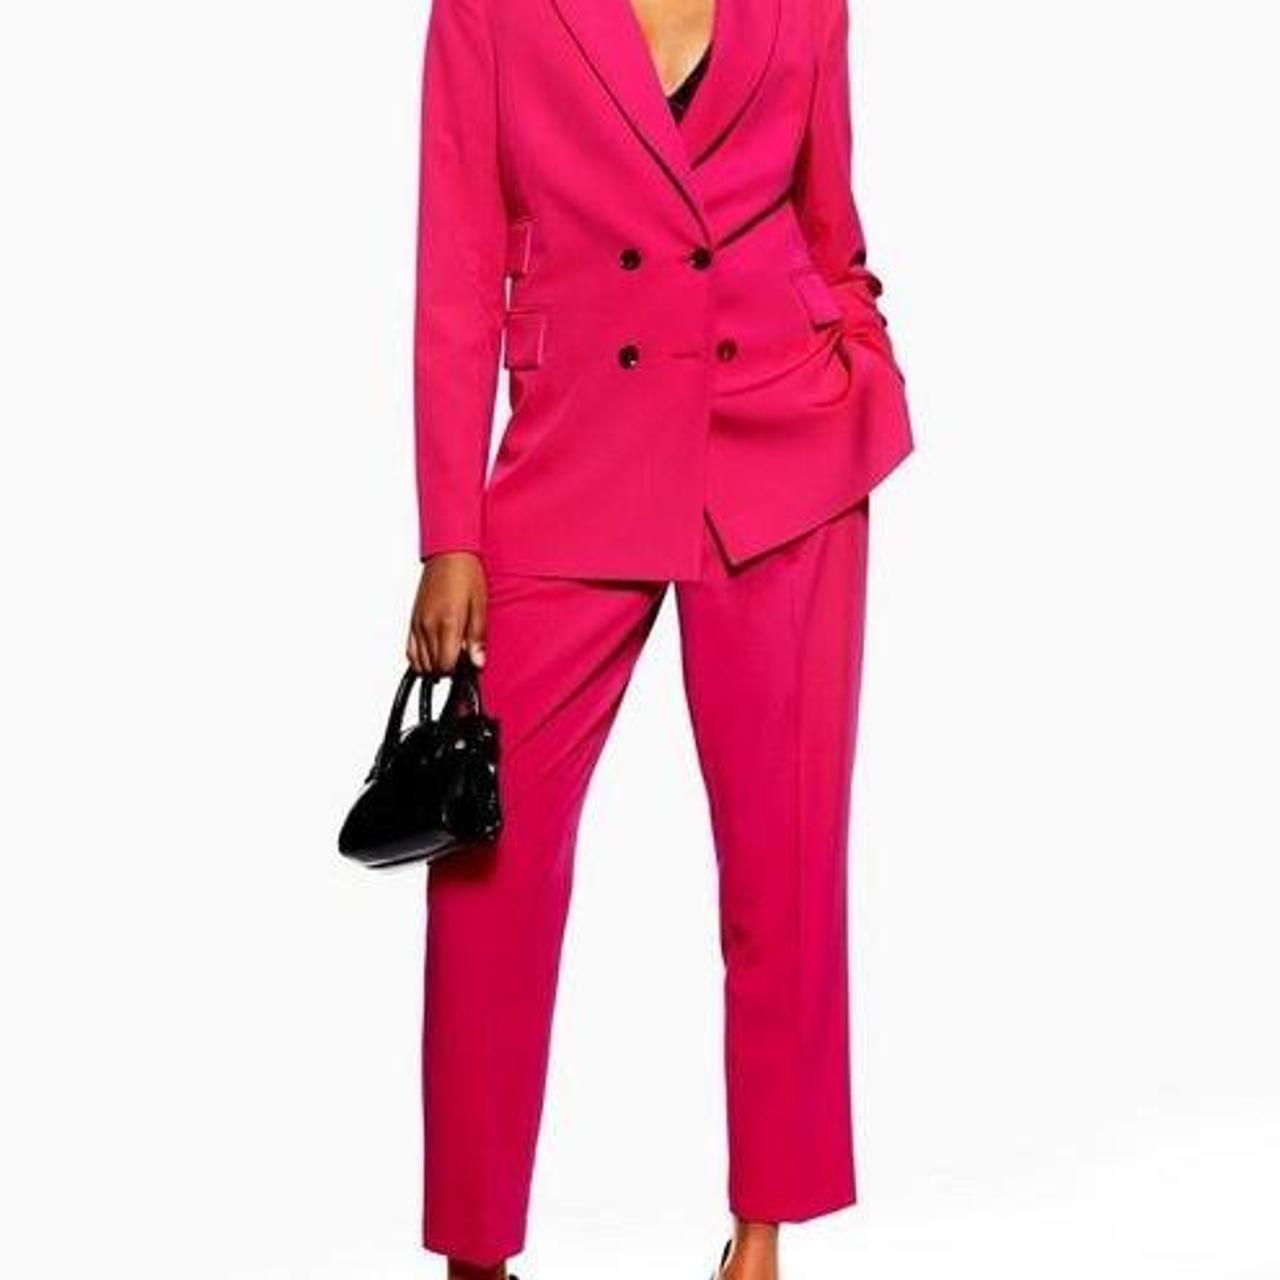 Hot Pink Blazer  Double Breasted Blazer  Pant Suit  Pantsuit  Lulus